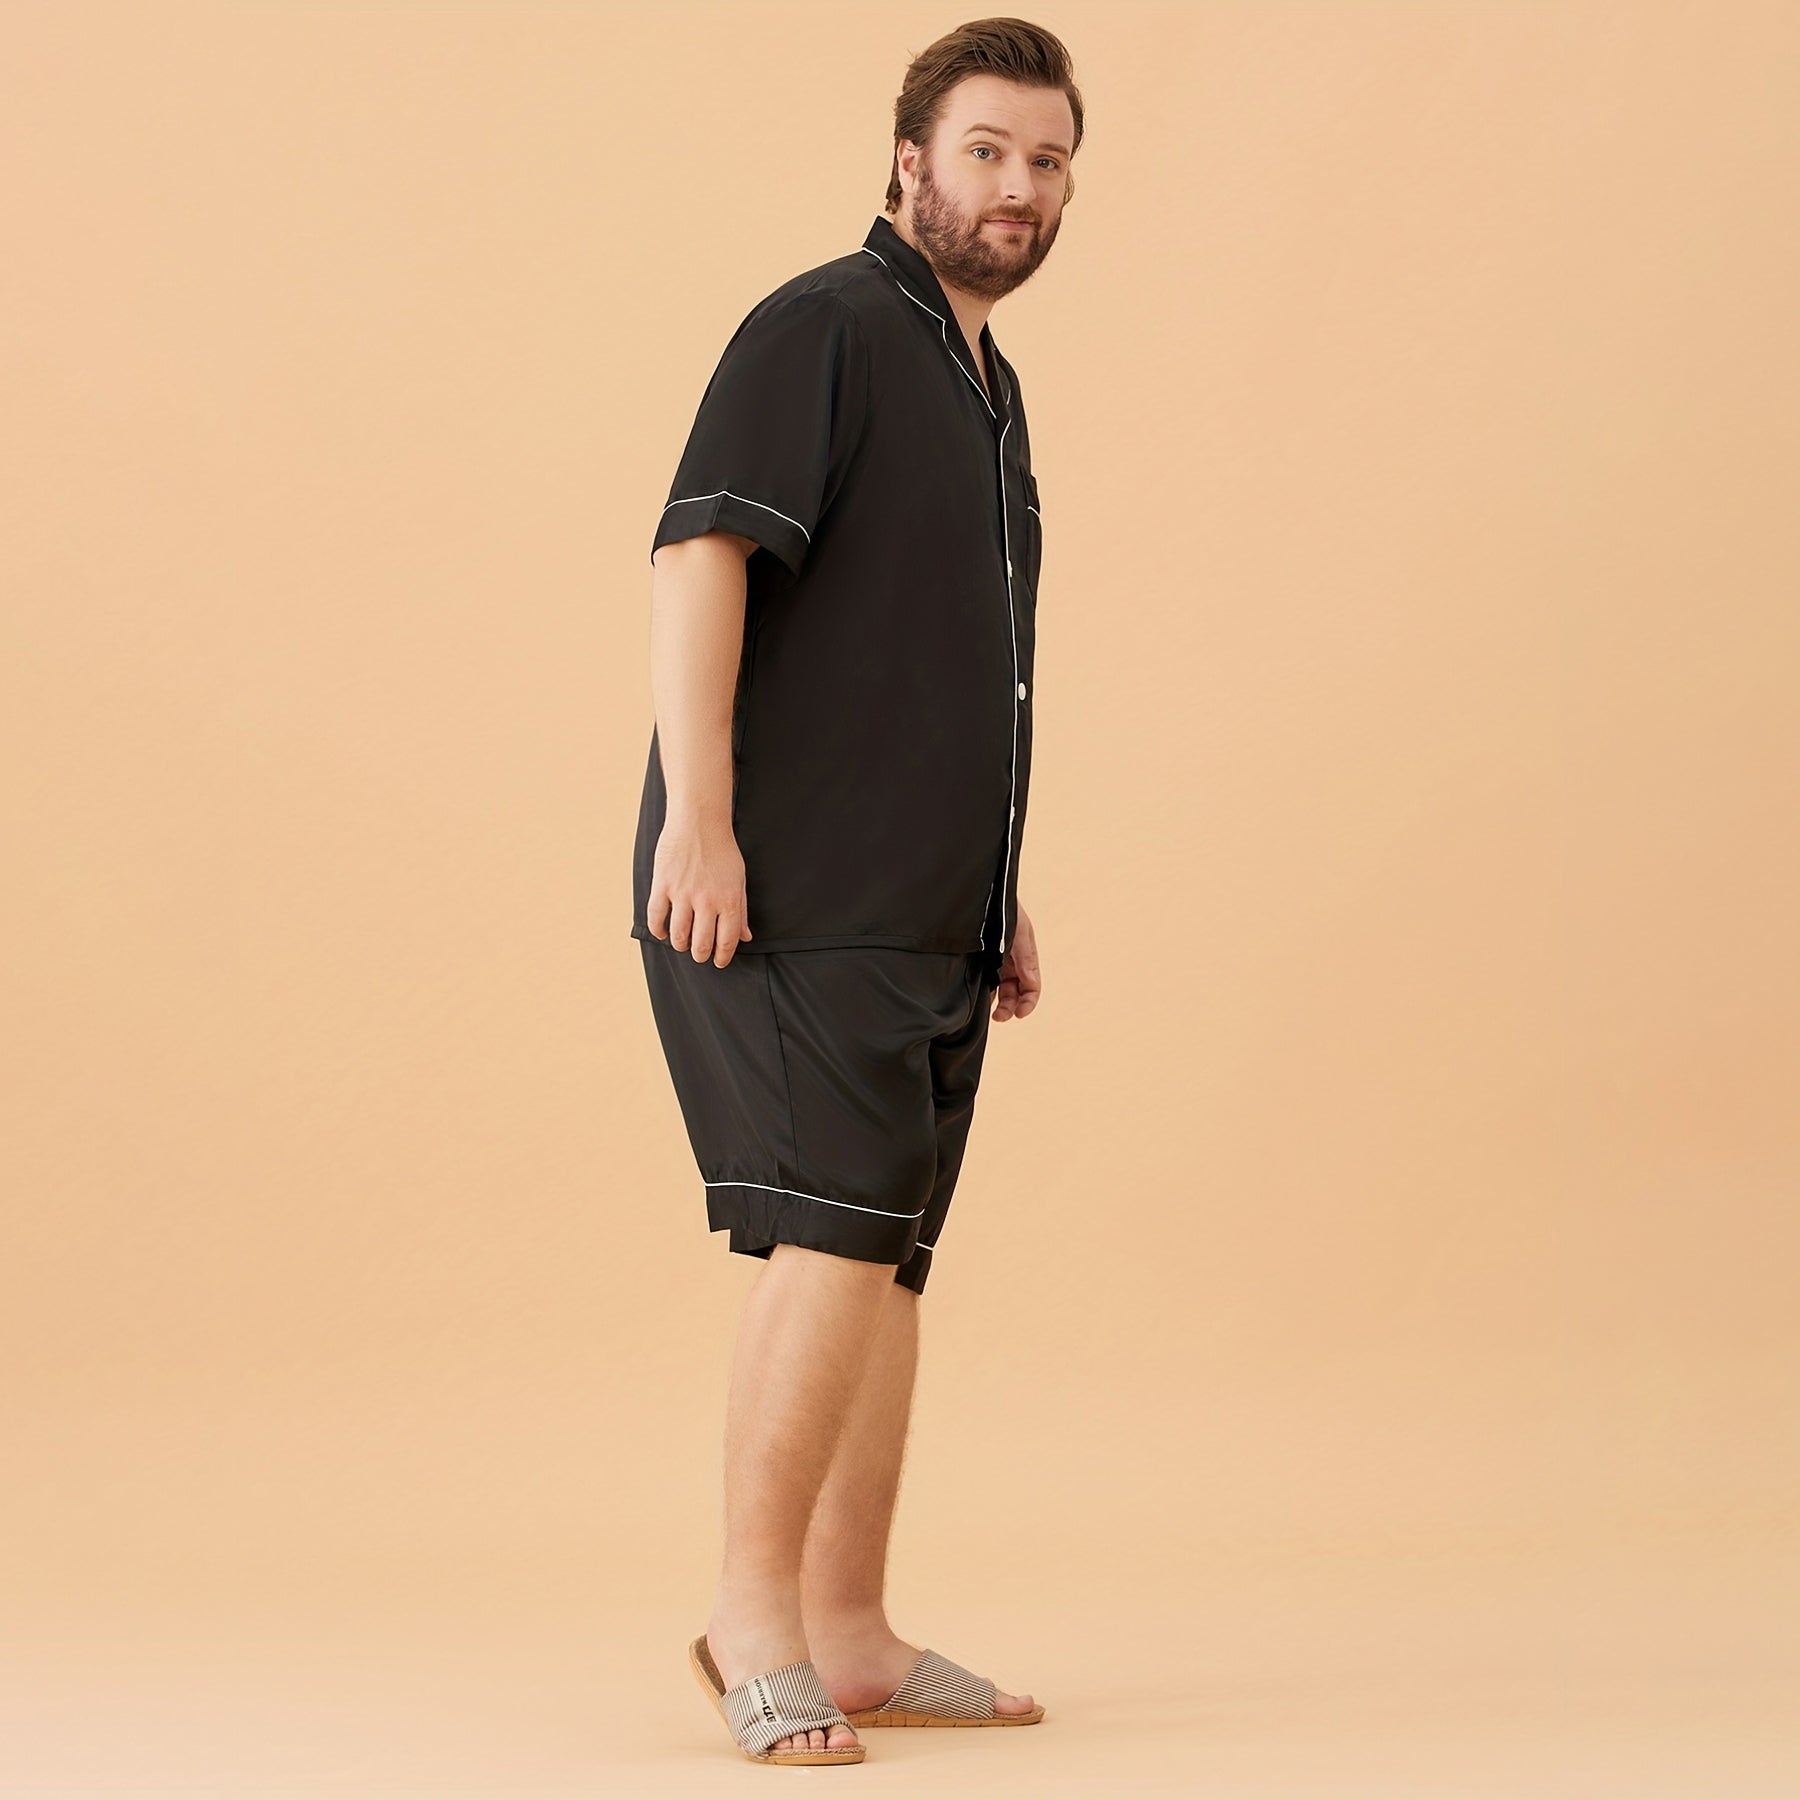 Plus Size Short Silk Pajamas Sets for Men Silk Sleepwear - slipintosoft